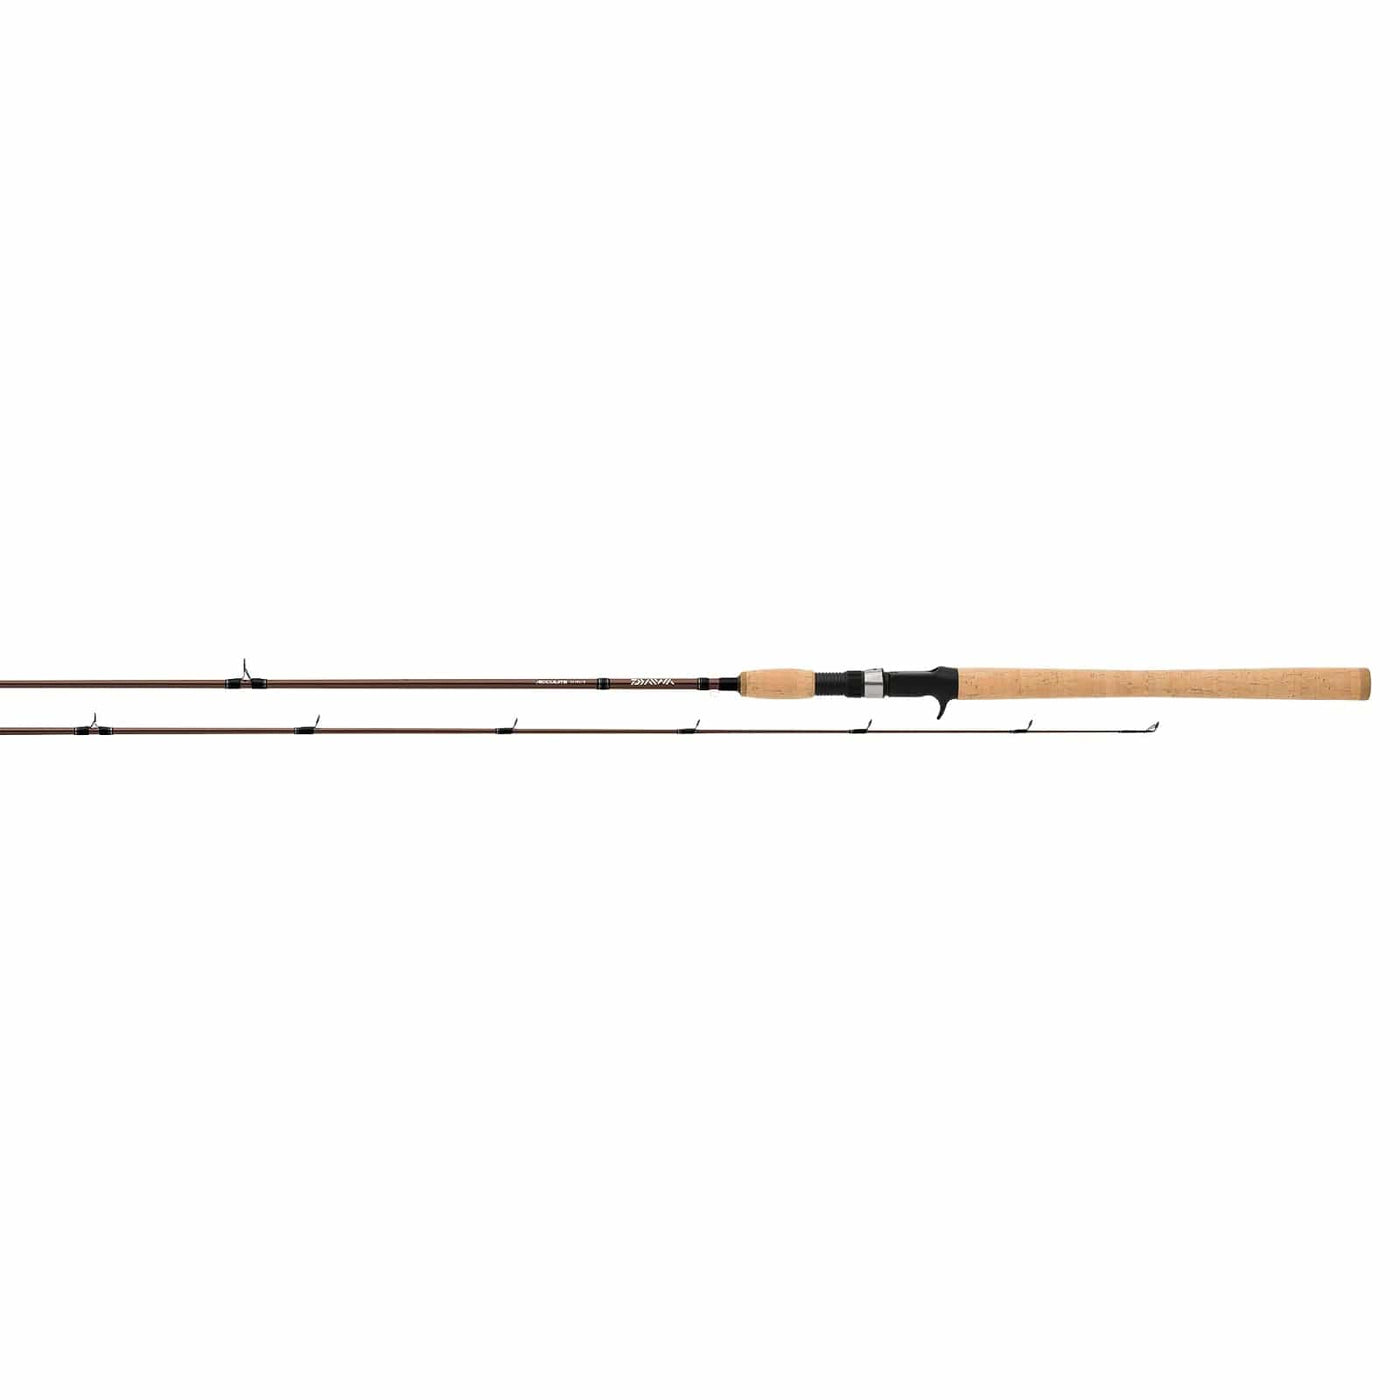 Daiwa Daiwa Acculite Spinning Rod ACLT962MFS 9 ft 6 in 2 pc Fishing